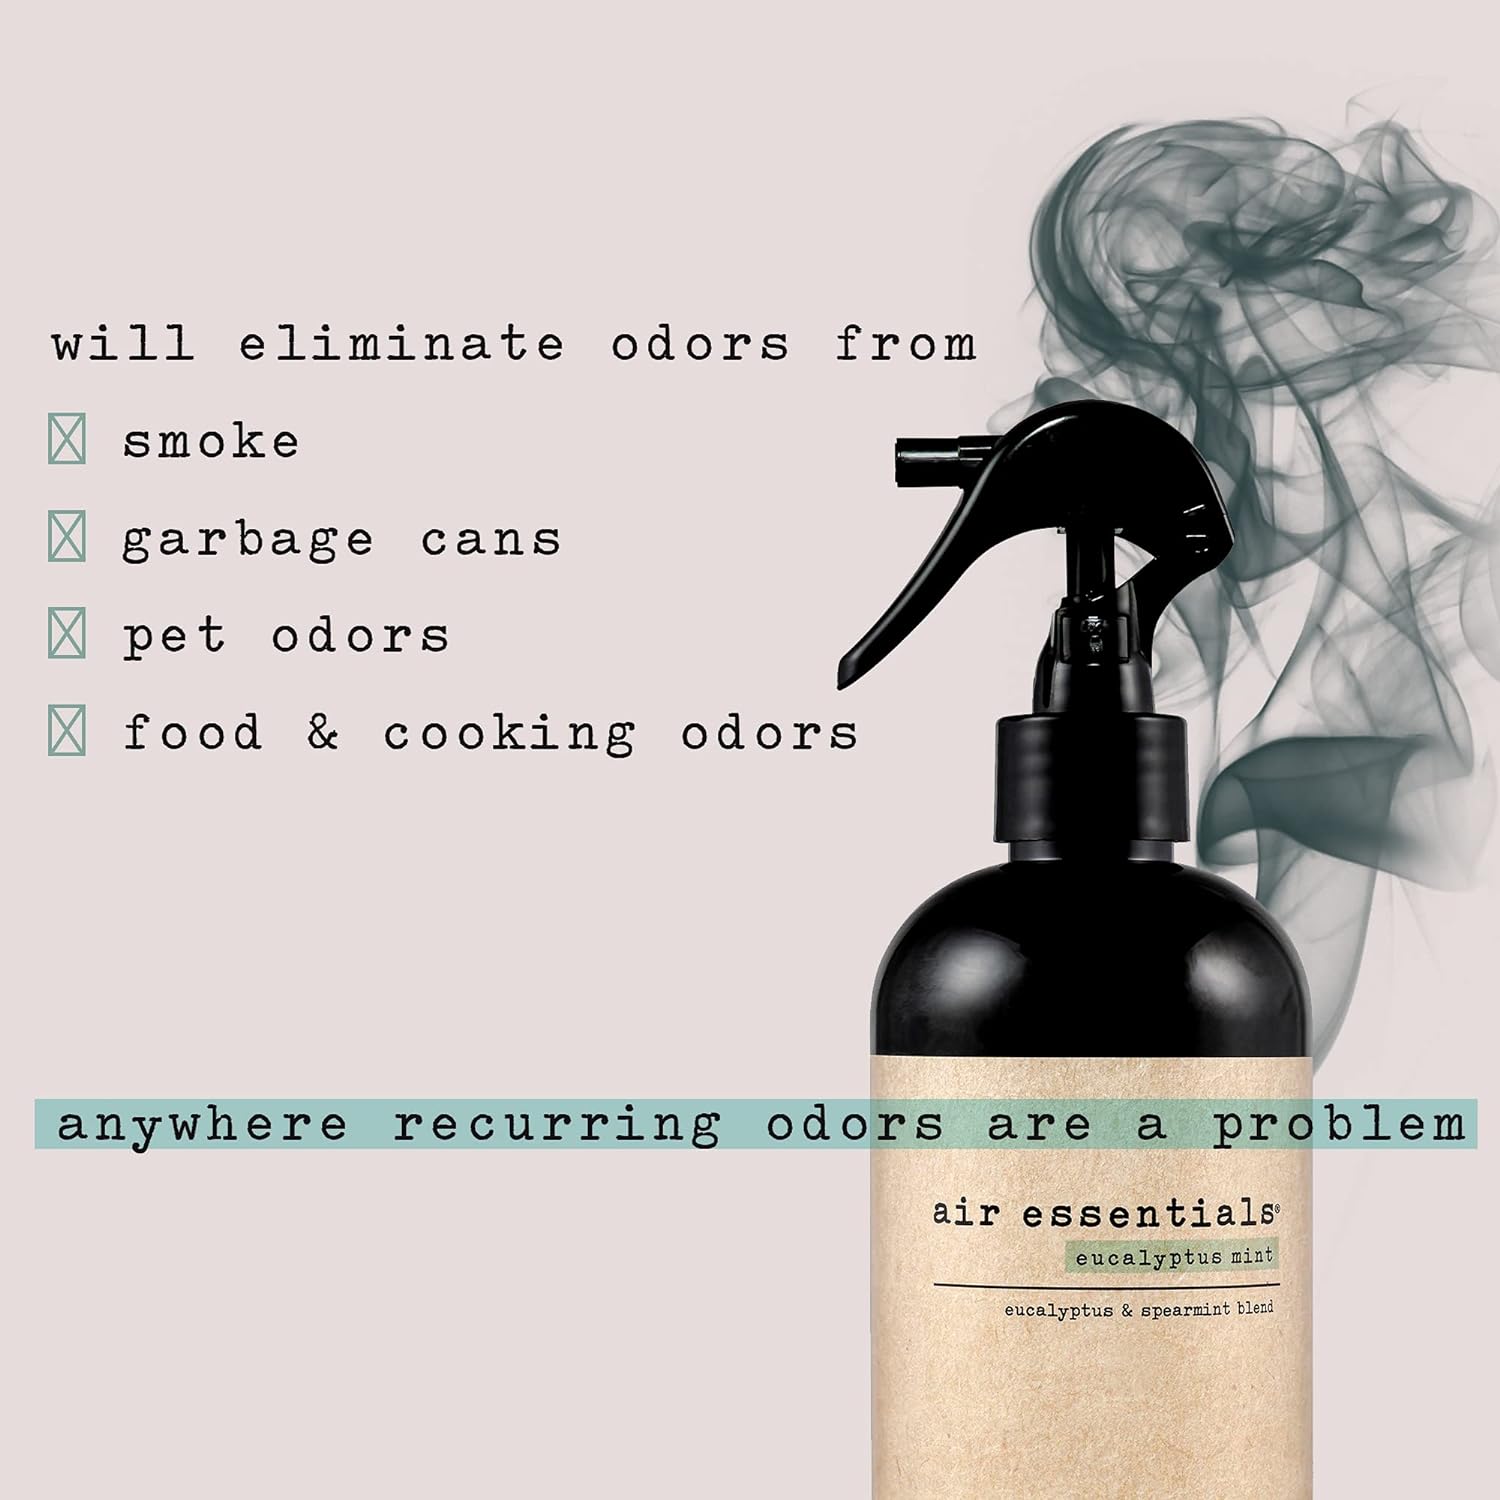 Air Essentials Air Freshener & Odor Eliminator Spray - Made with Pure Essential Oils - Eucalyptus Mint - 12 Ounce - 2 Pack : Health & Household